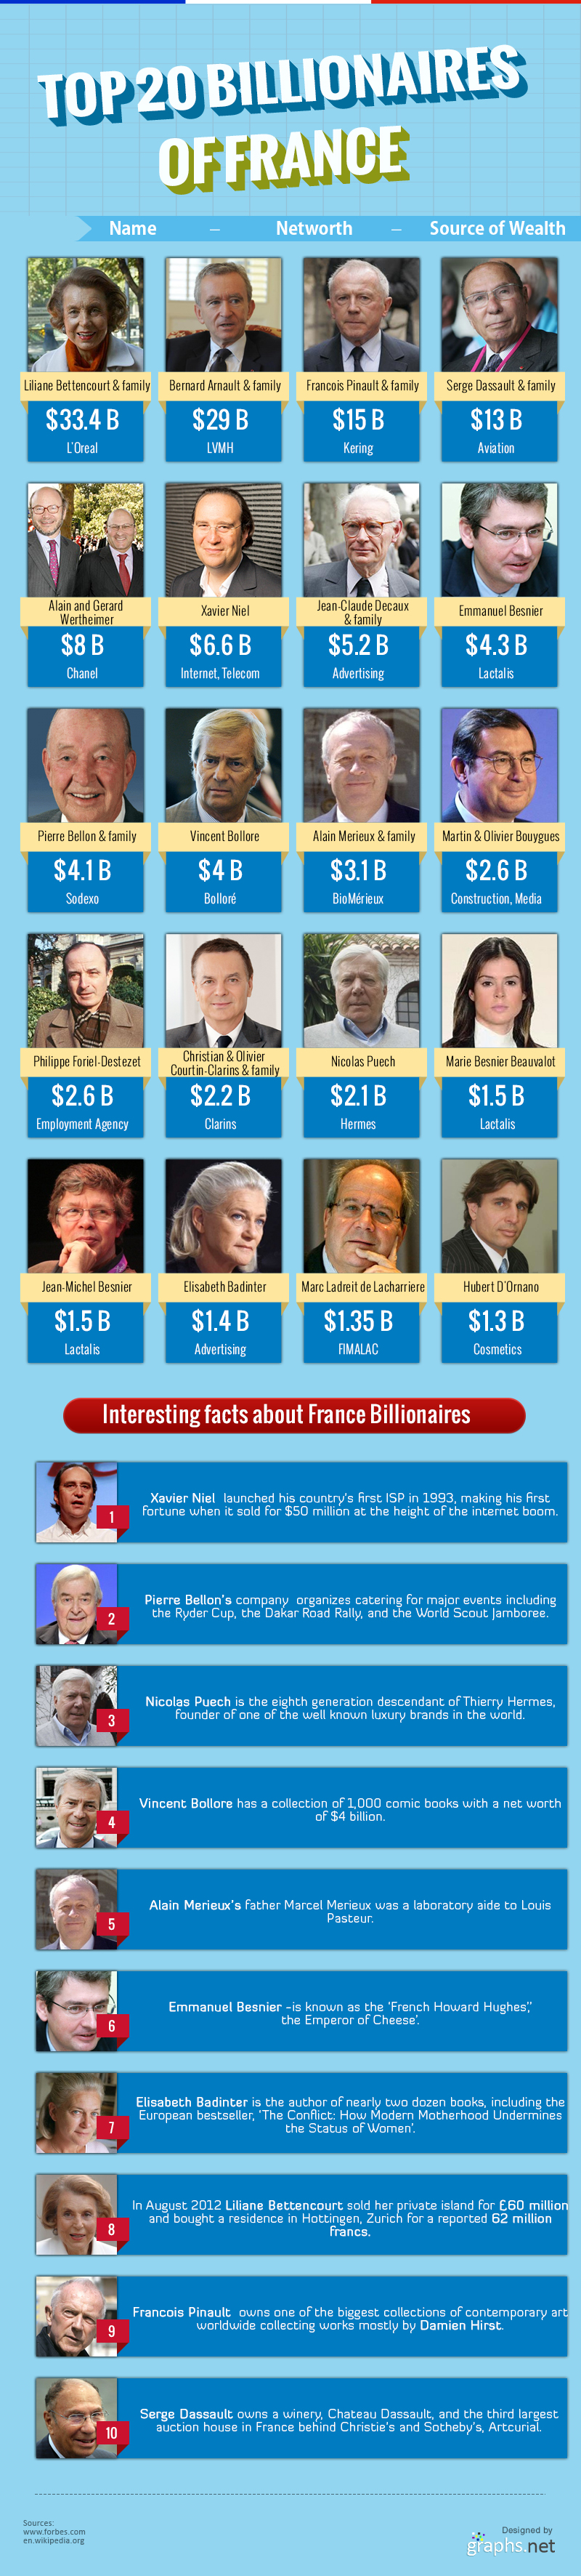 Top 20 billionaires of France